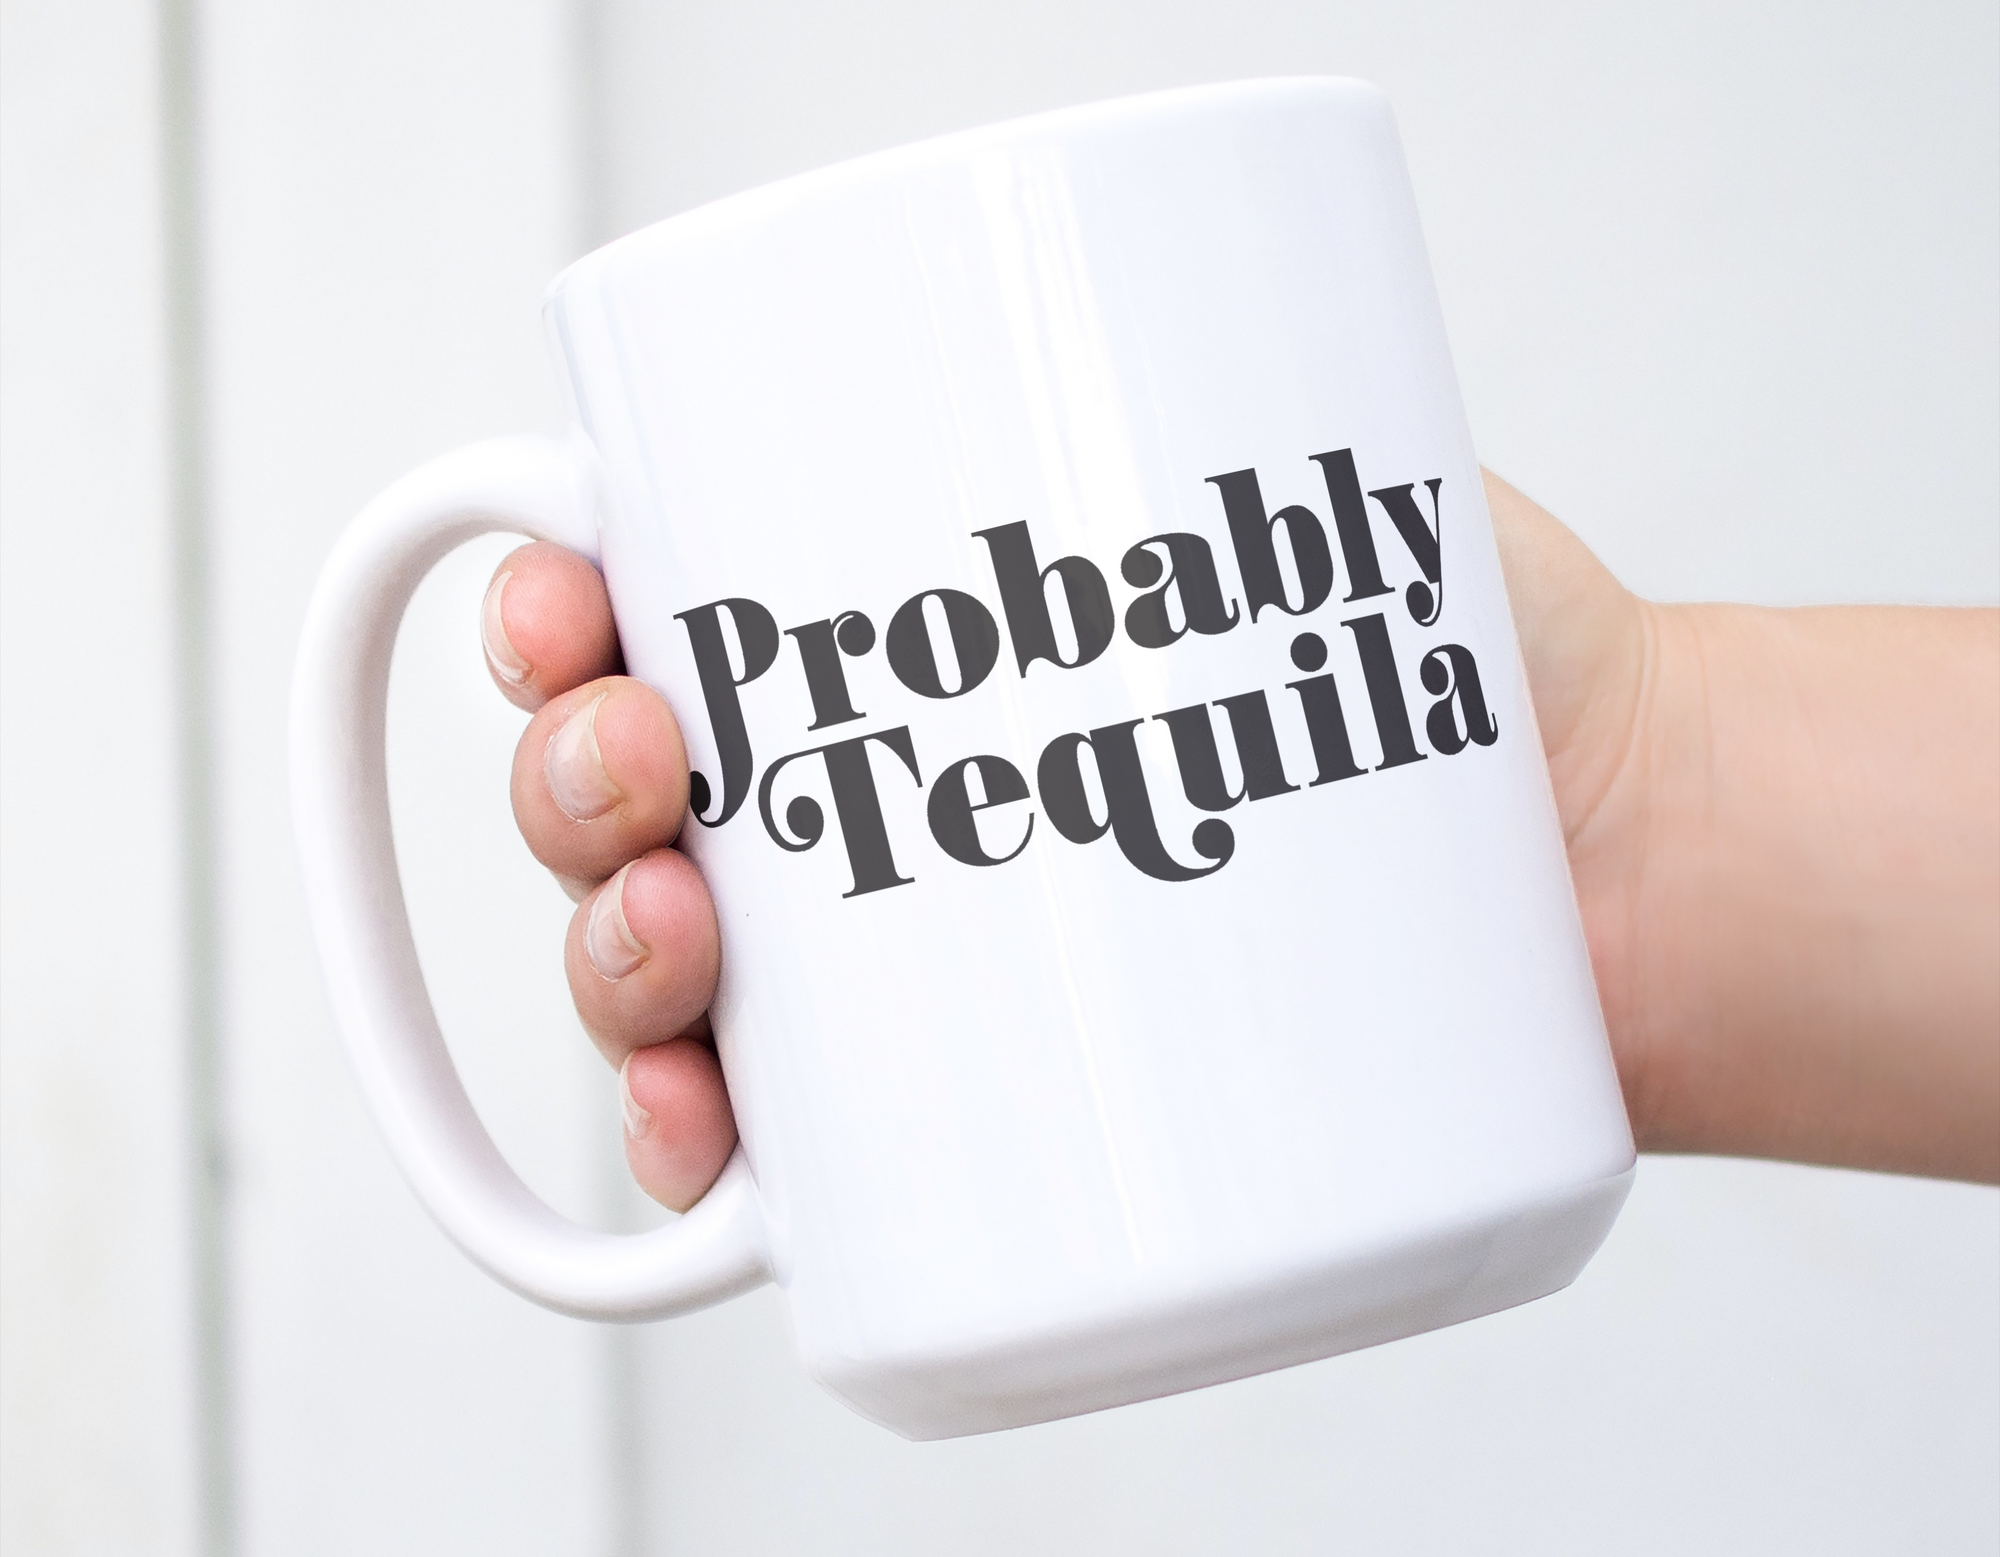 Probably Tequila Mug